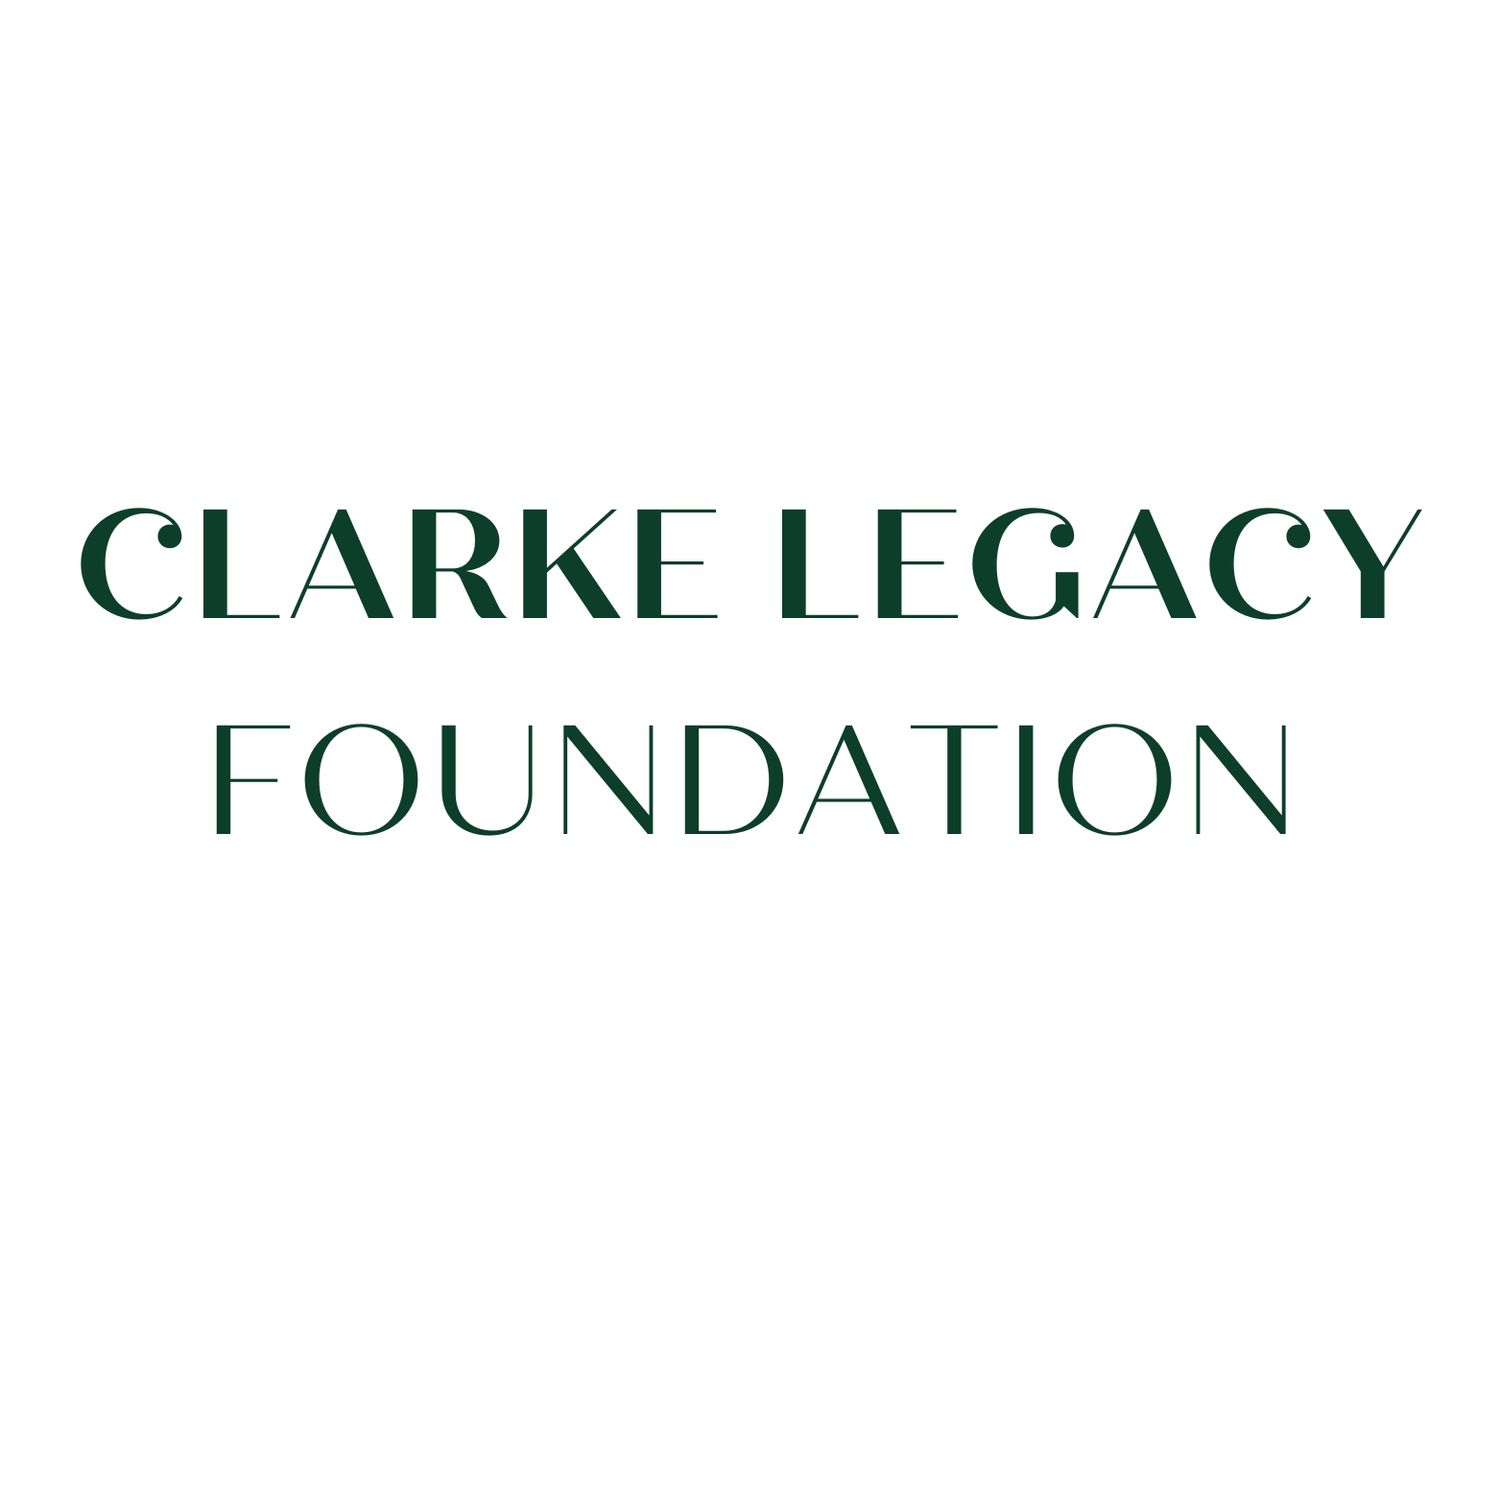 Clarke Legacy Leadership Academy